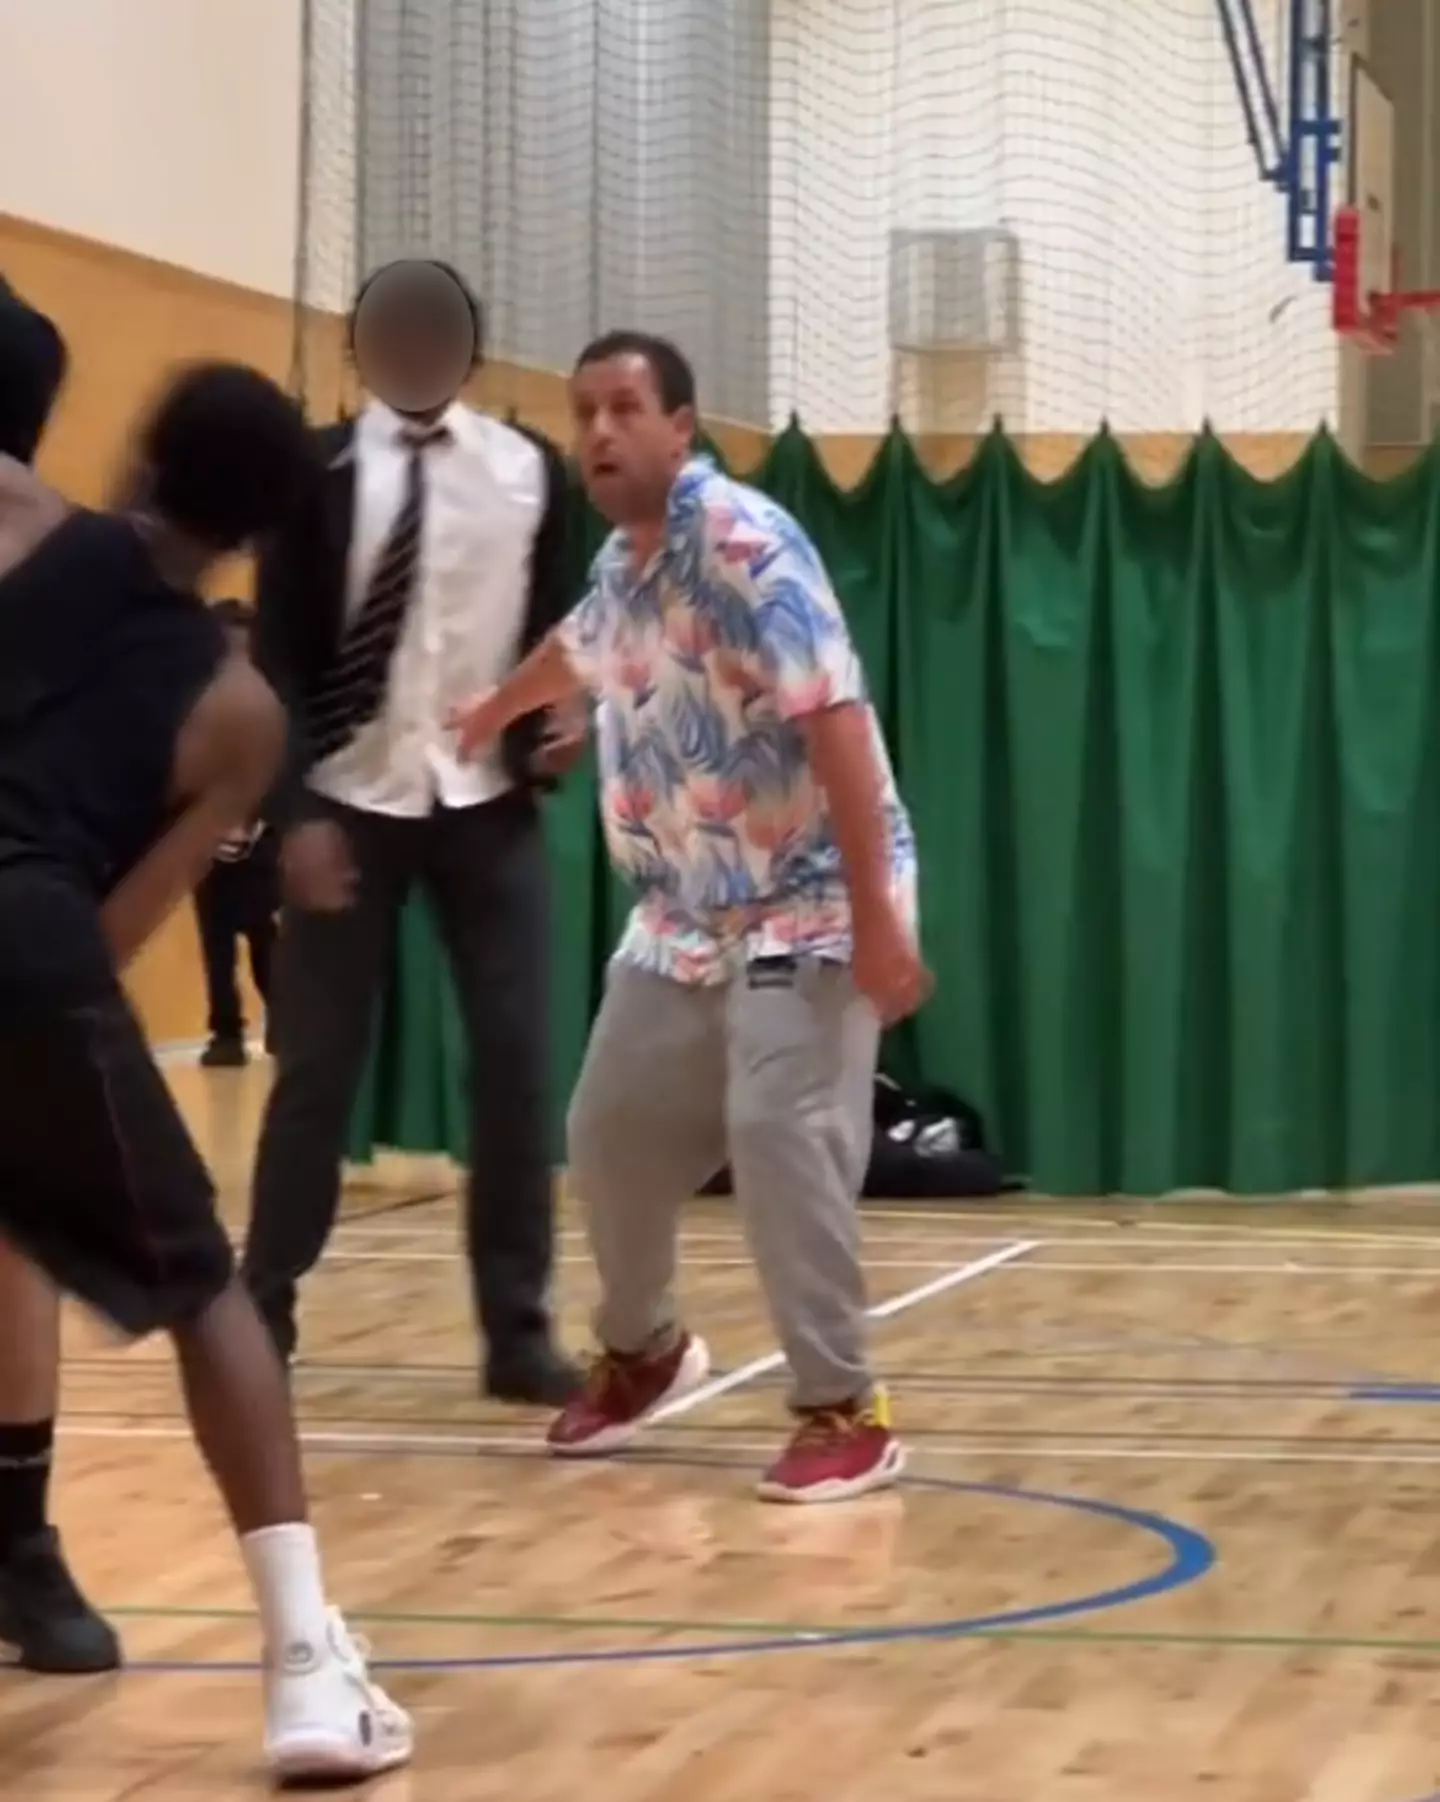 Adam Sandler was filmed placing basketball.